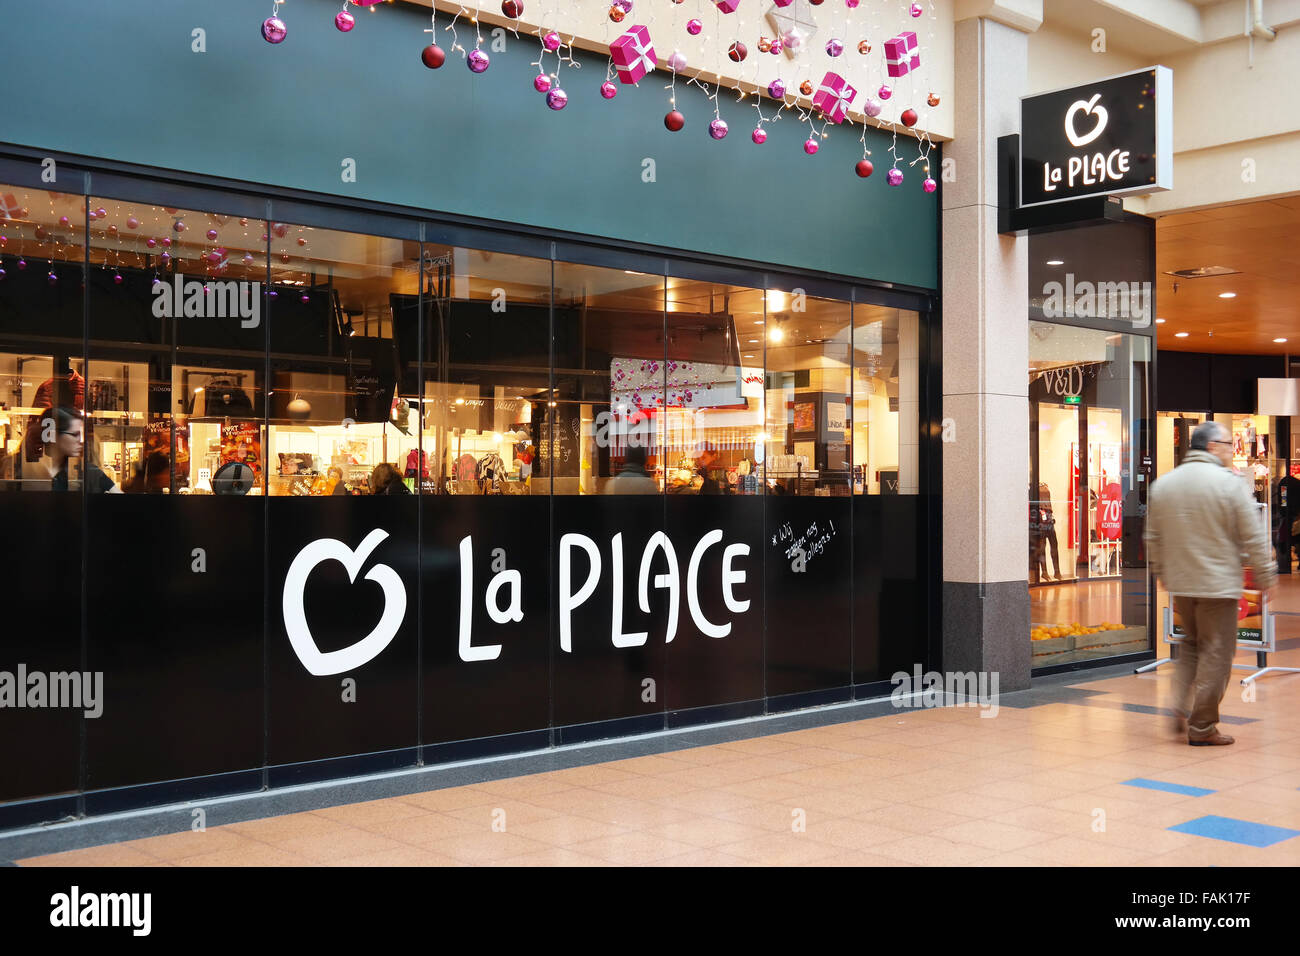 La Place restaurant in a Mall Stock Photo